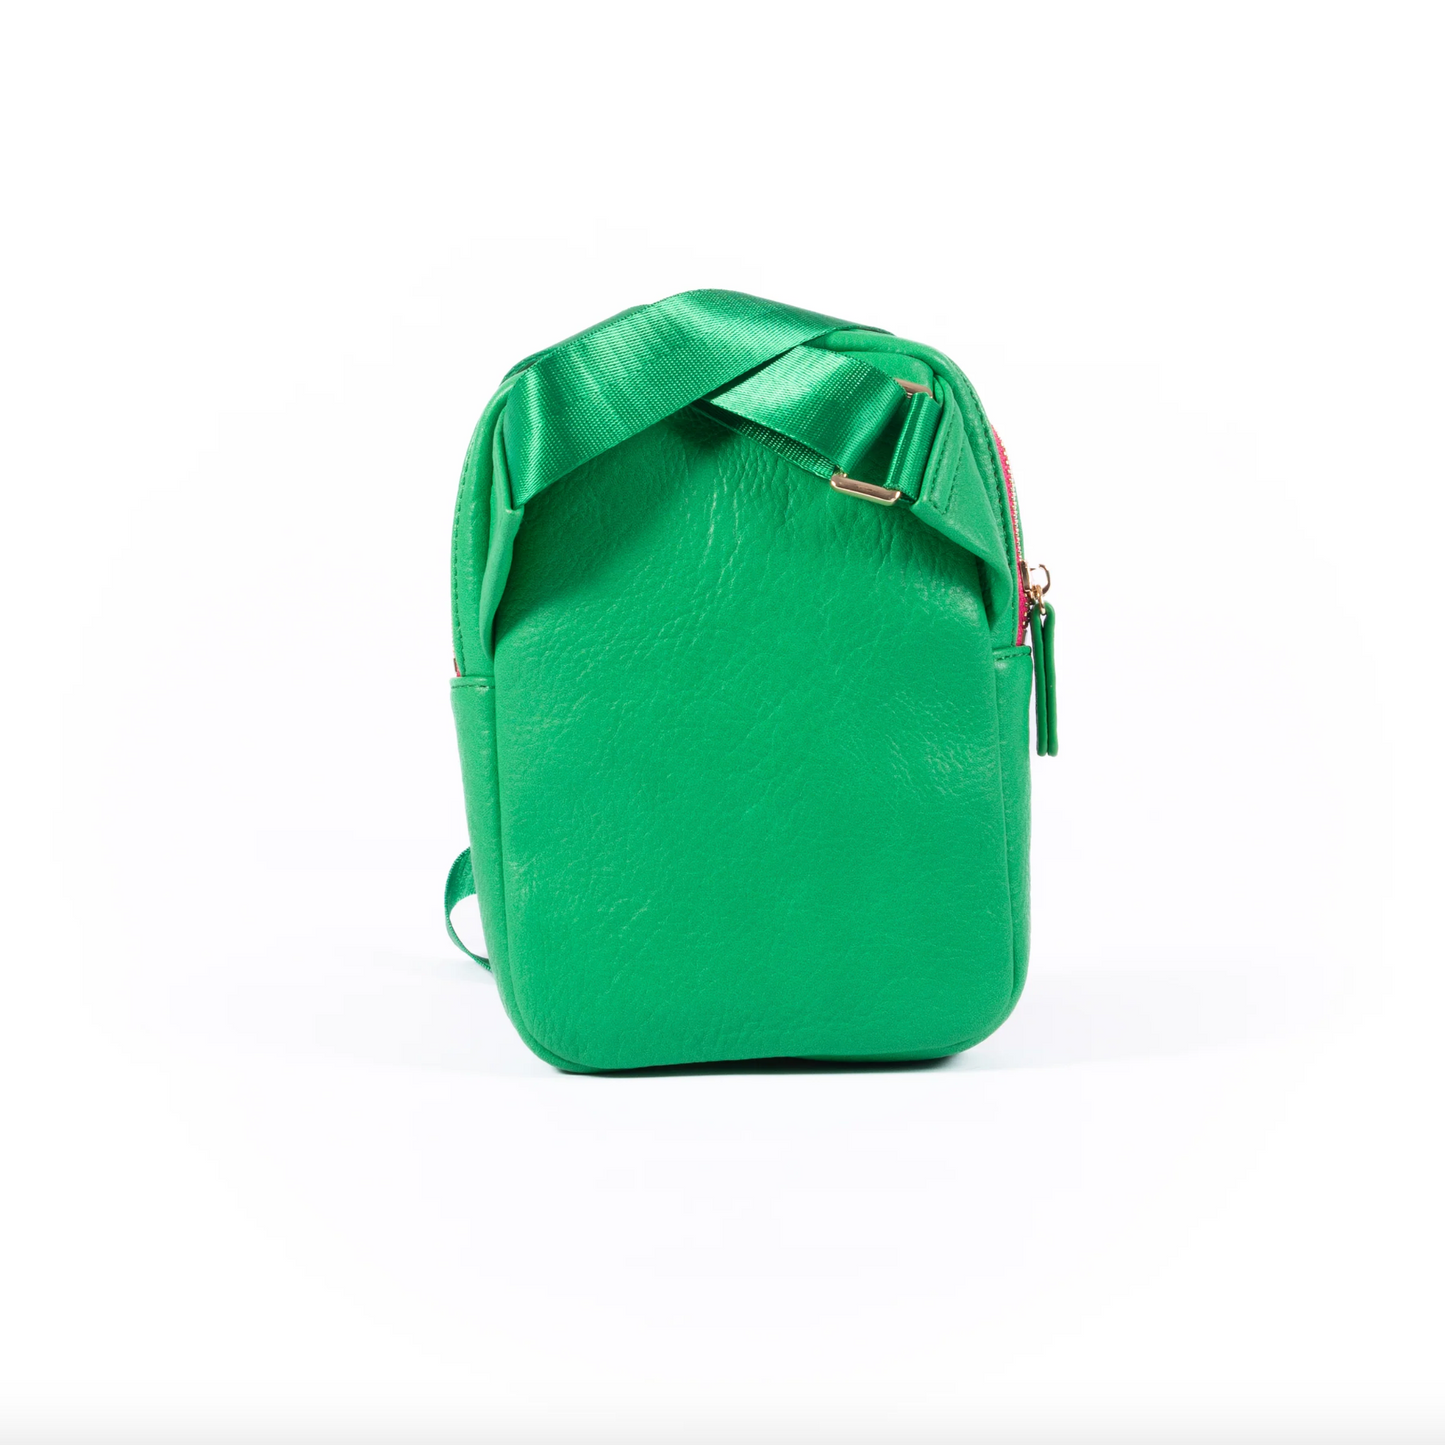 Brooklyn Bag in Green